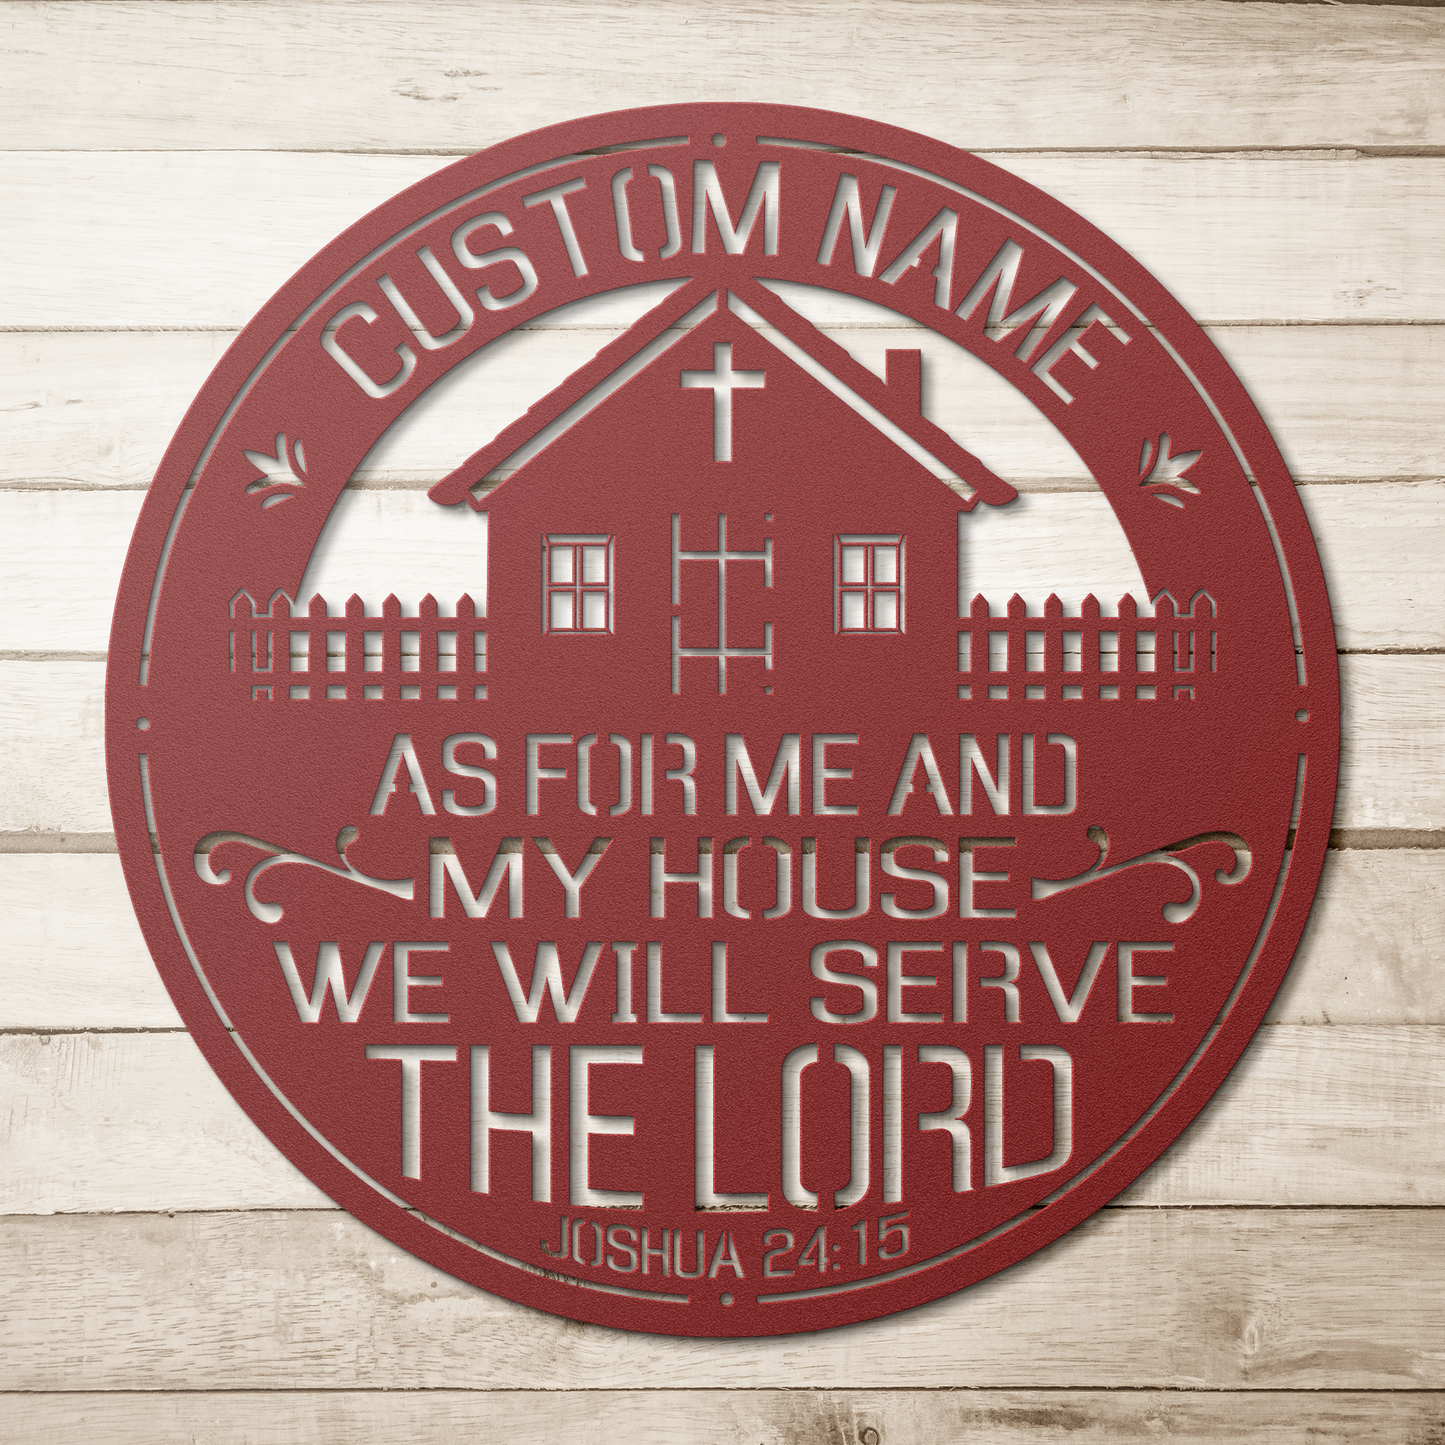 Custom Name As For Me and My House Joshua 24:15 - Metal Art/Sign